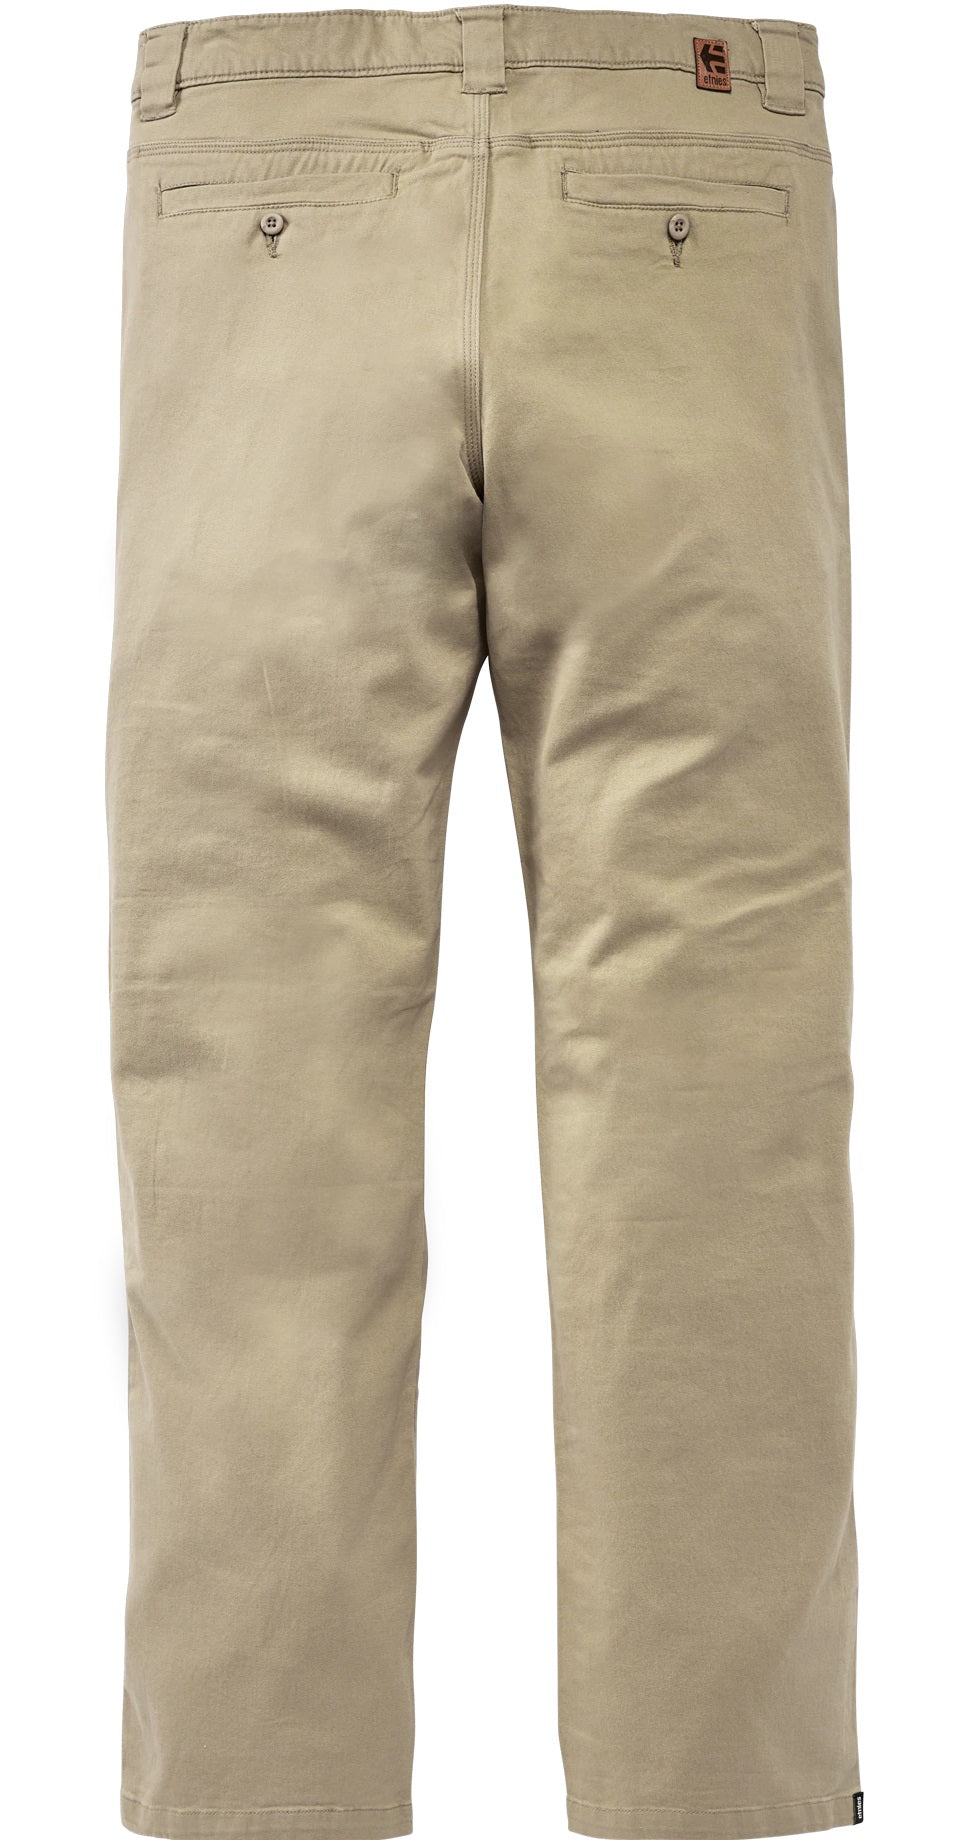 etnies Classic Chino Pants, Khaki